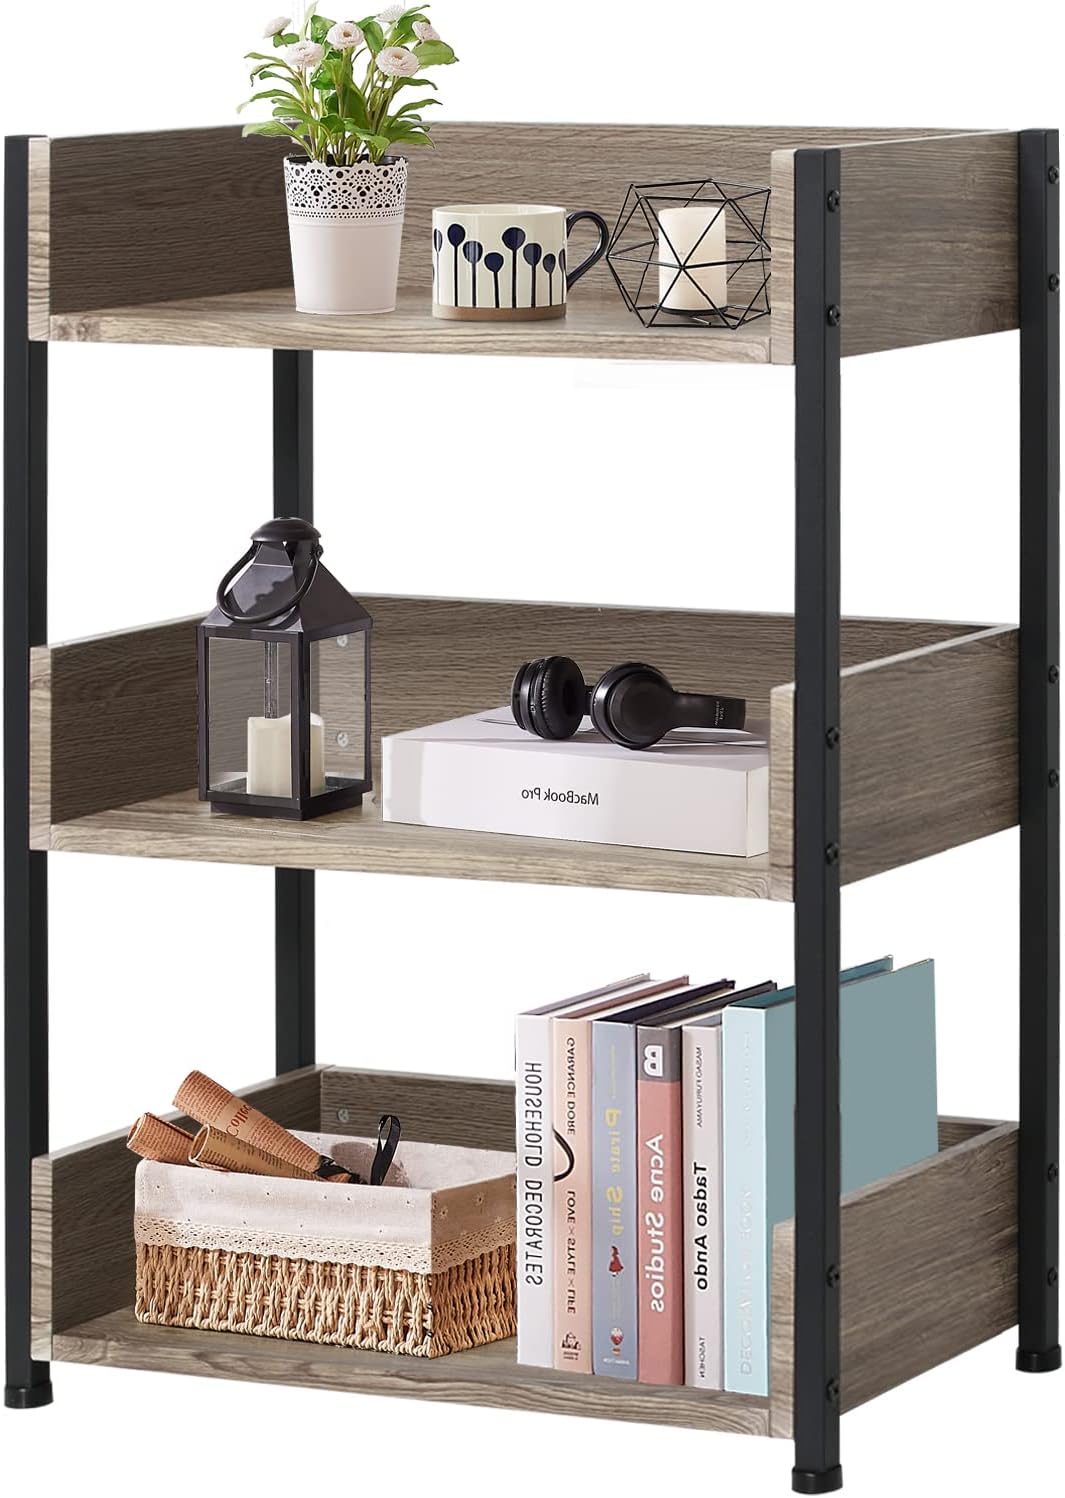 VECELO 4 Tier Rotating Bookshelf Tower,360° Corner Display Shelf with